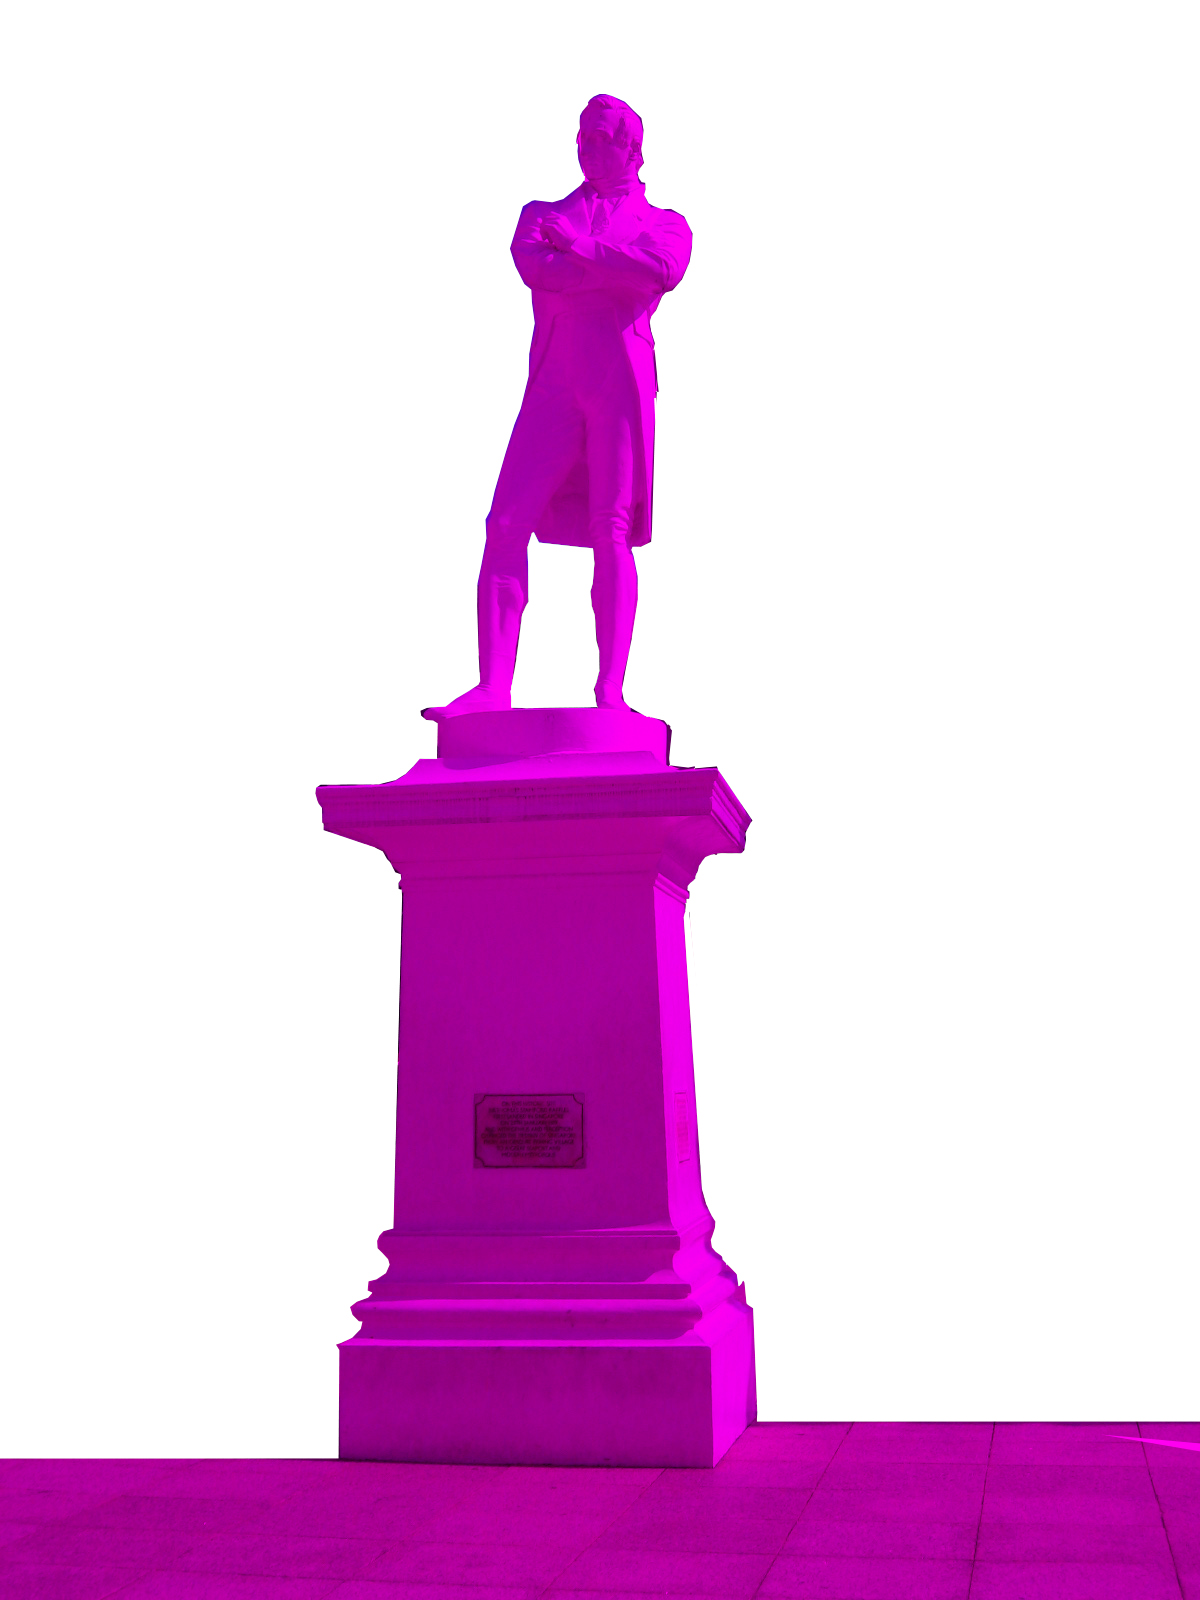 Rendering of pink statue